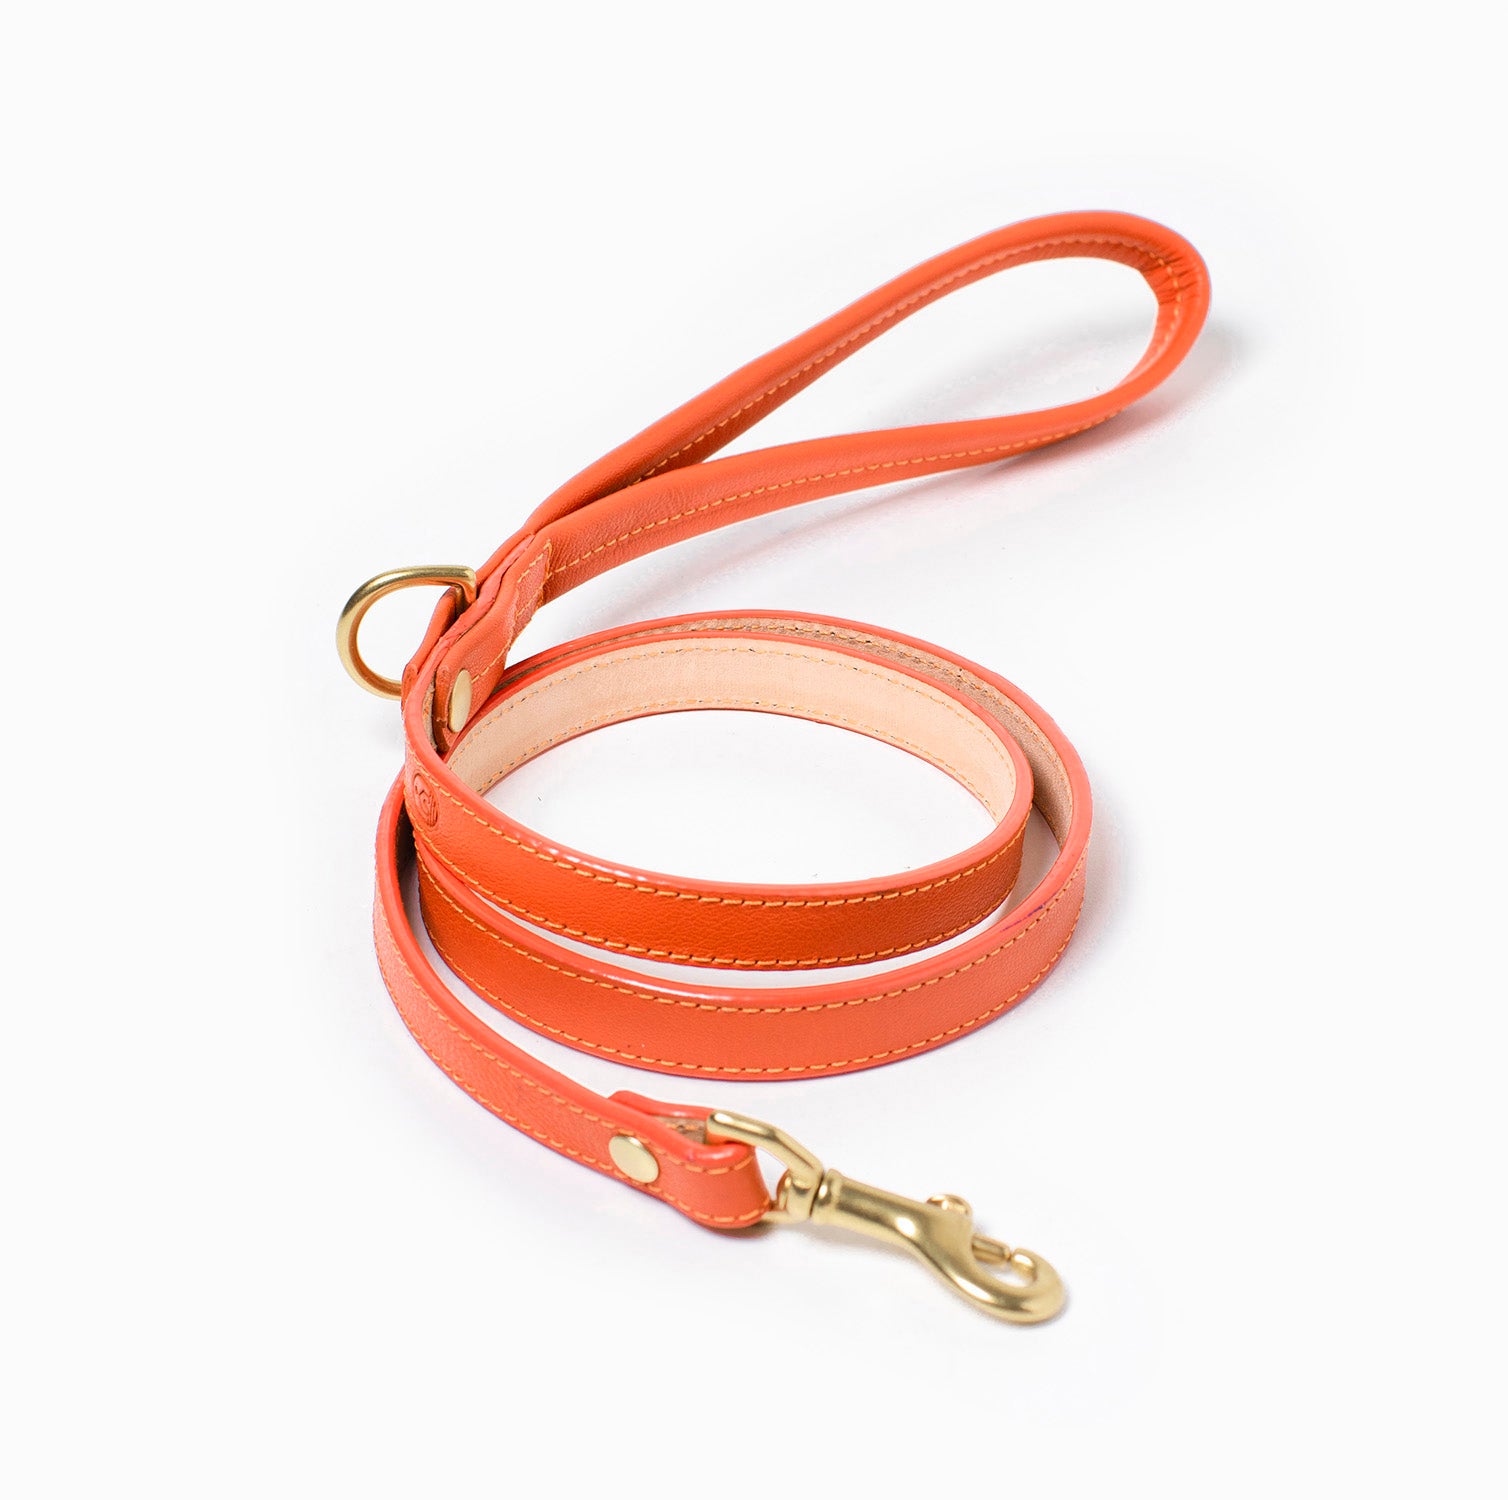 Orange leather dog leash with brass hardware